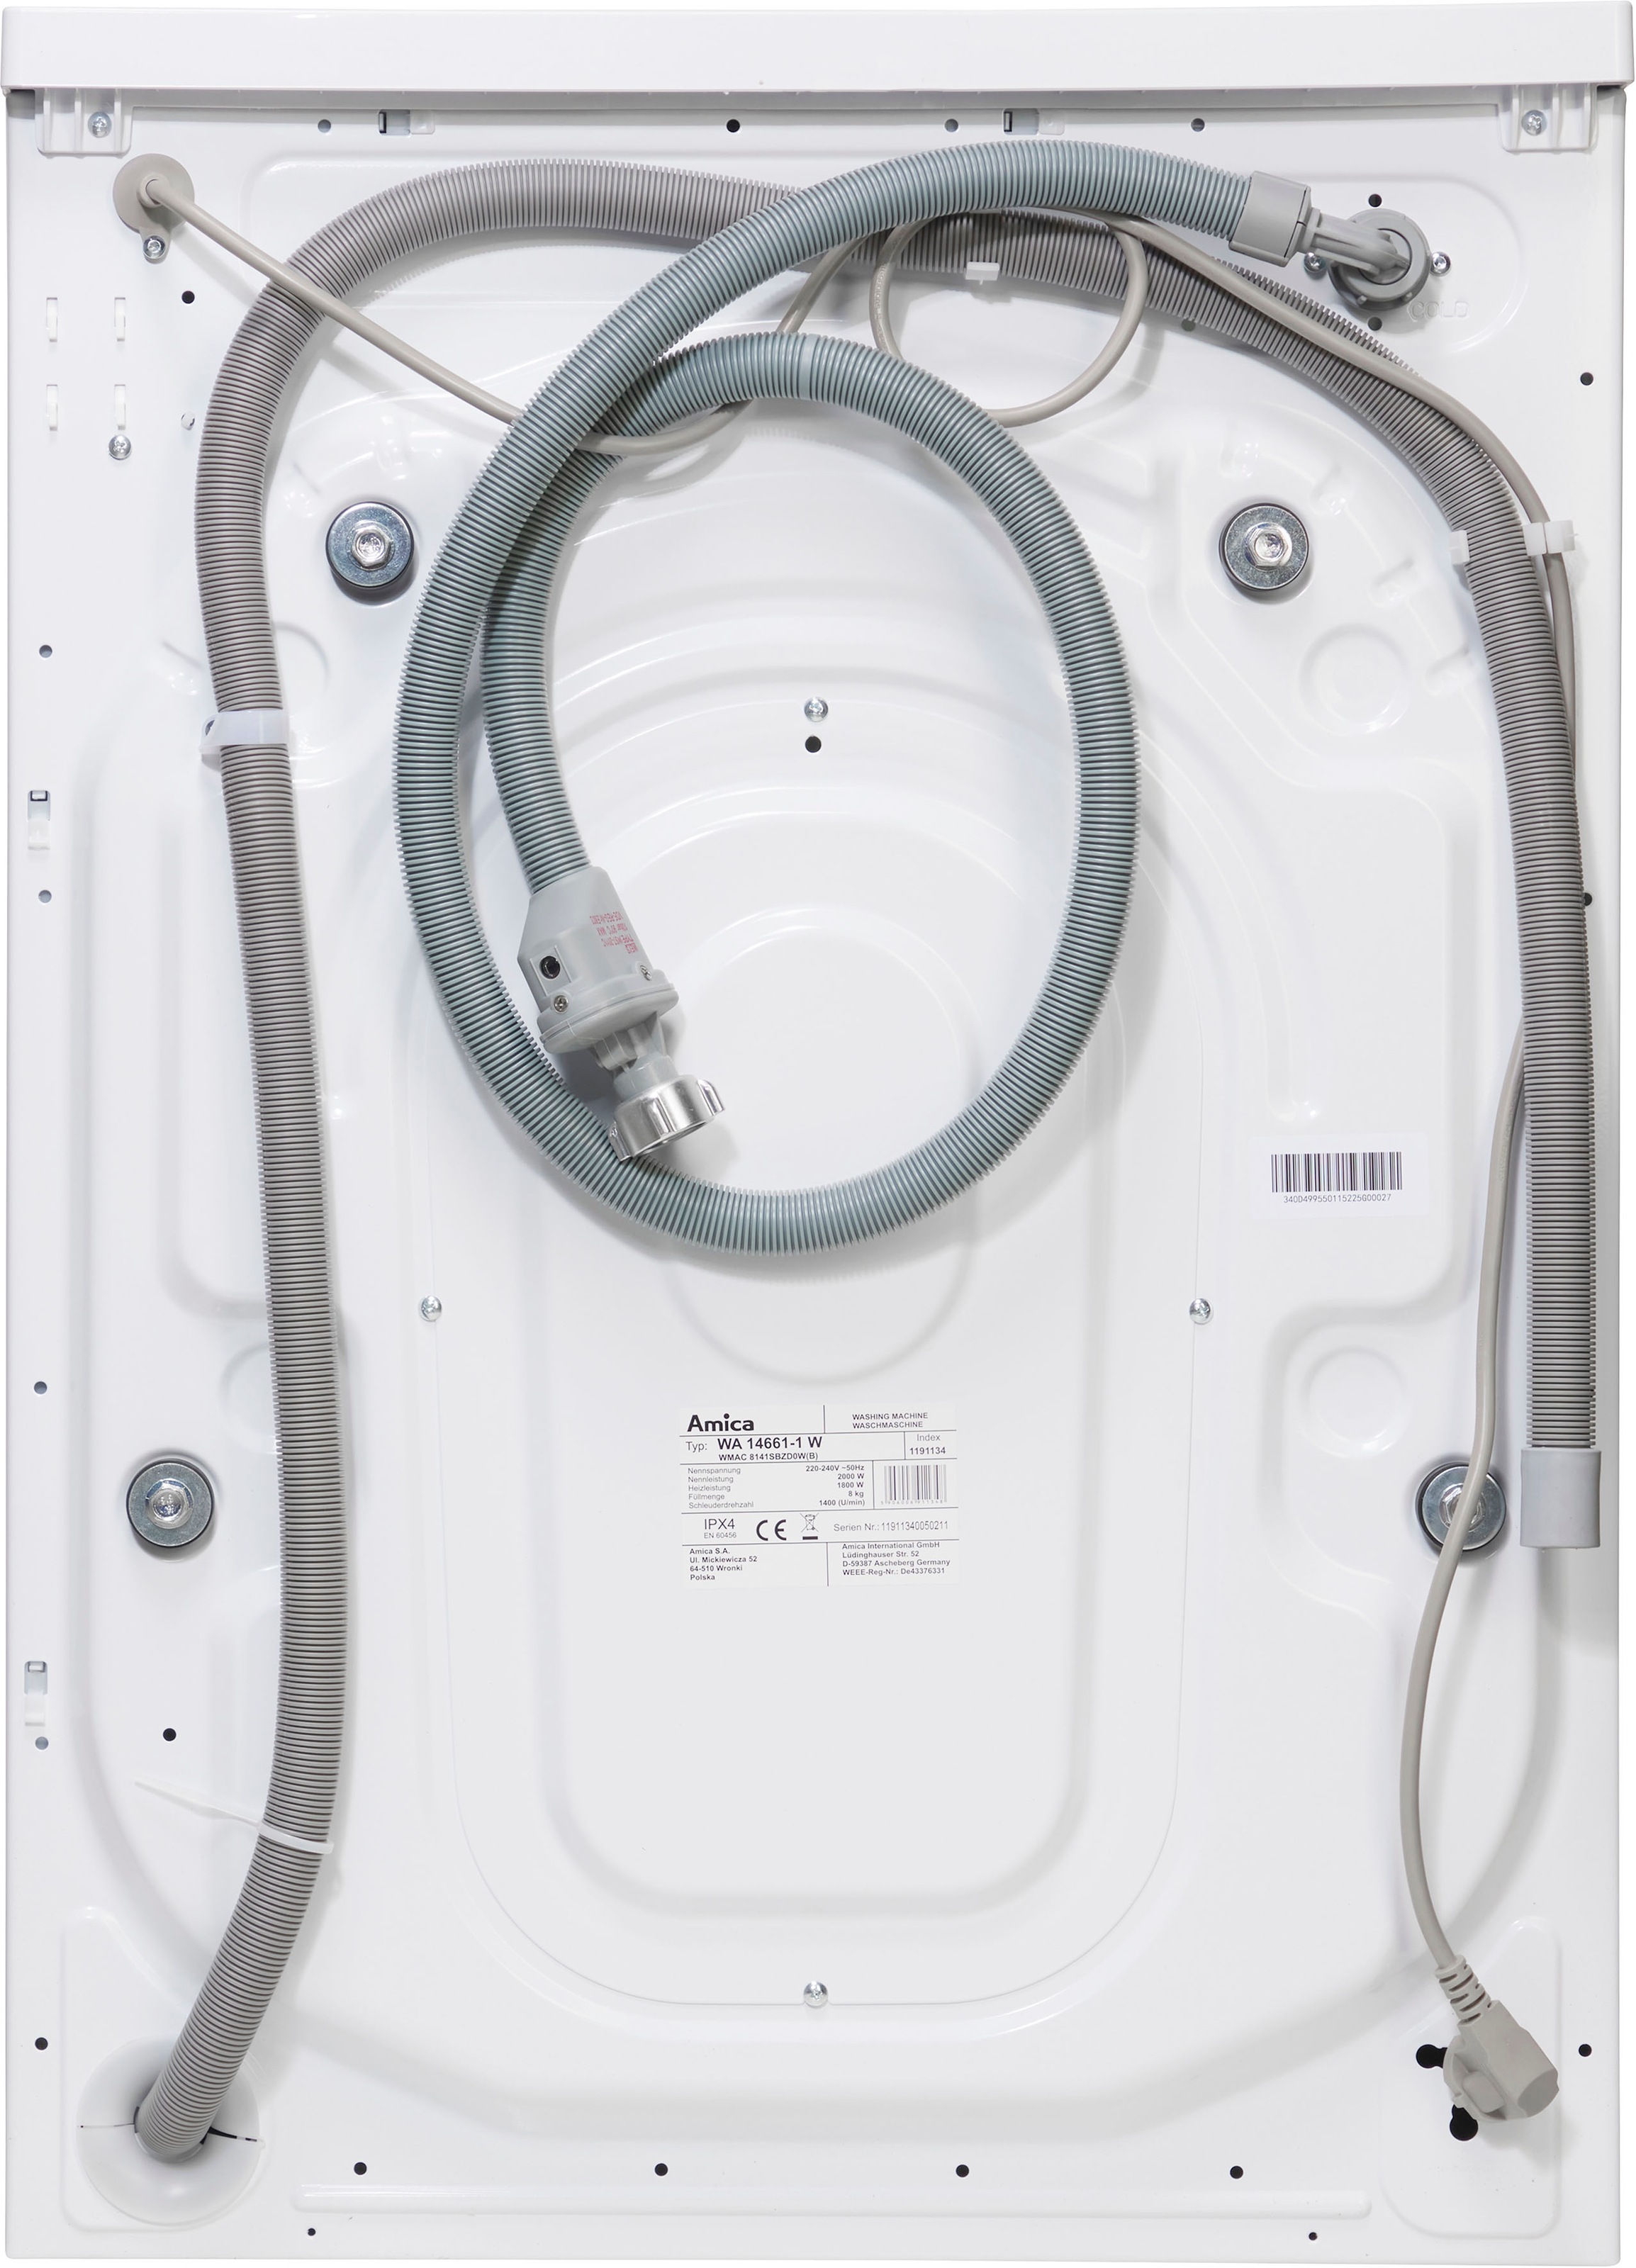 Waschmaschine »WA Line, W, 1400 Amica kg, Raten 8 U/min auf Classic W«, 14661-1 14661-1 WA bestellen